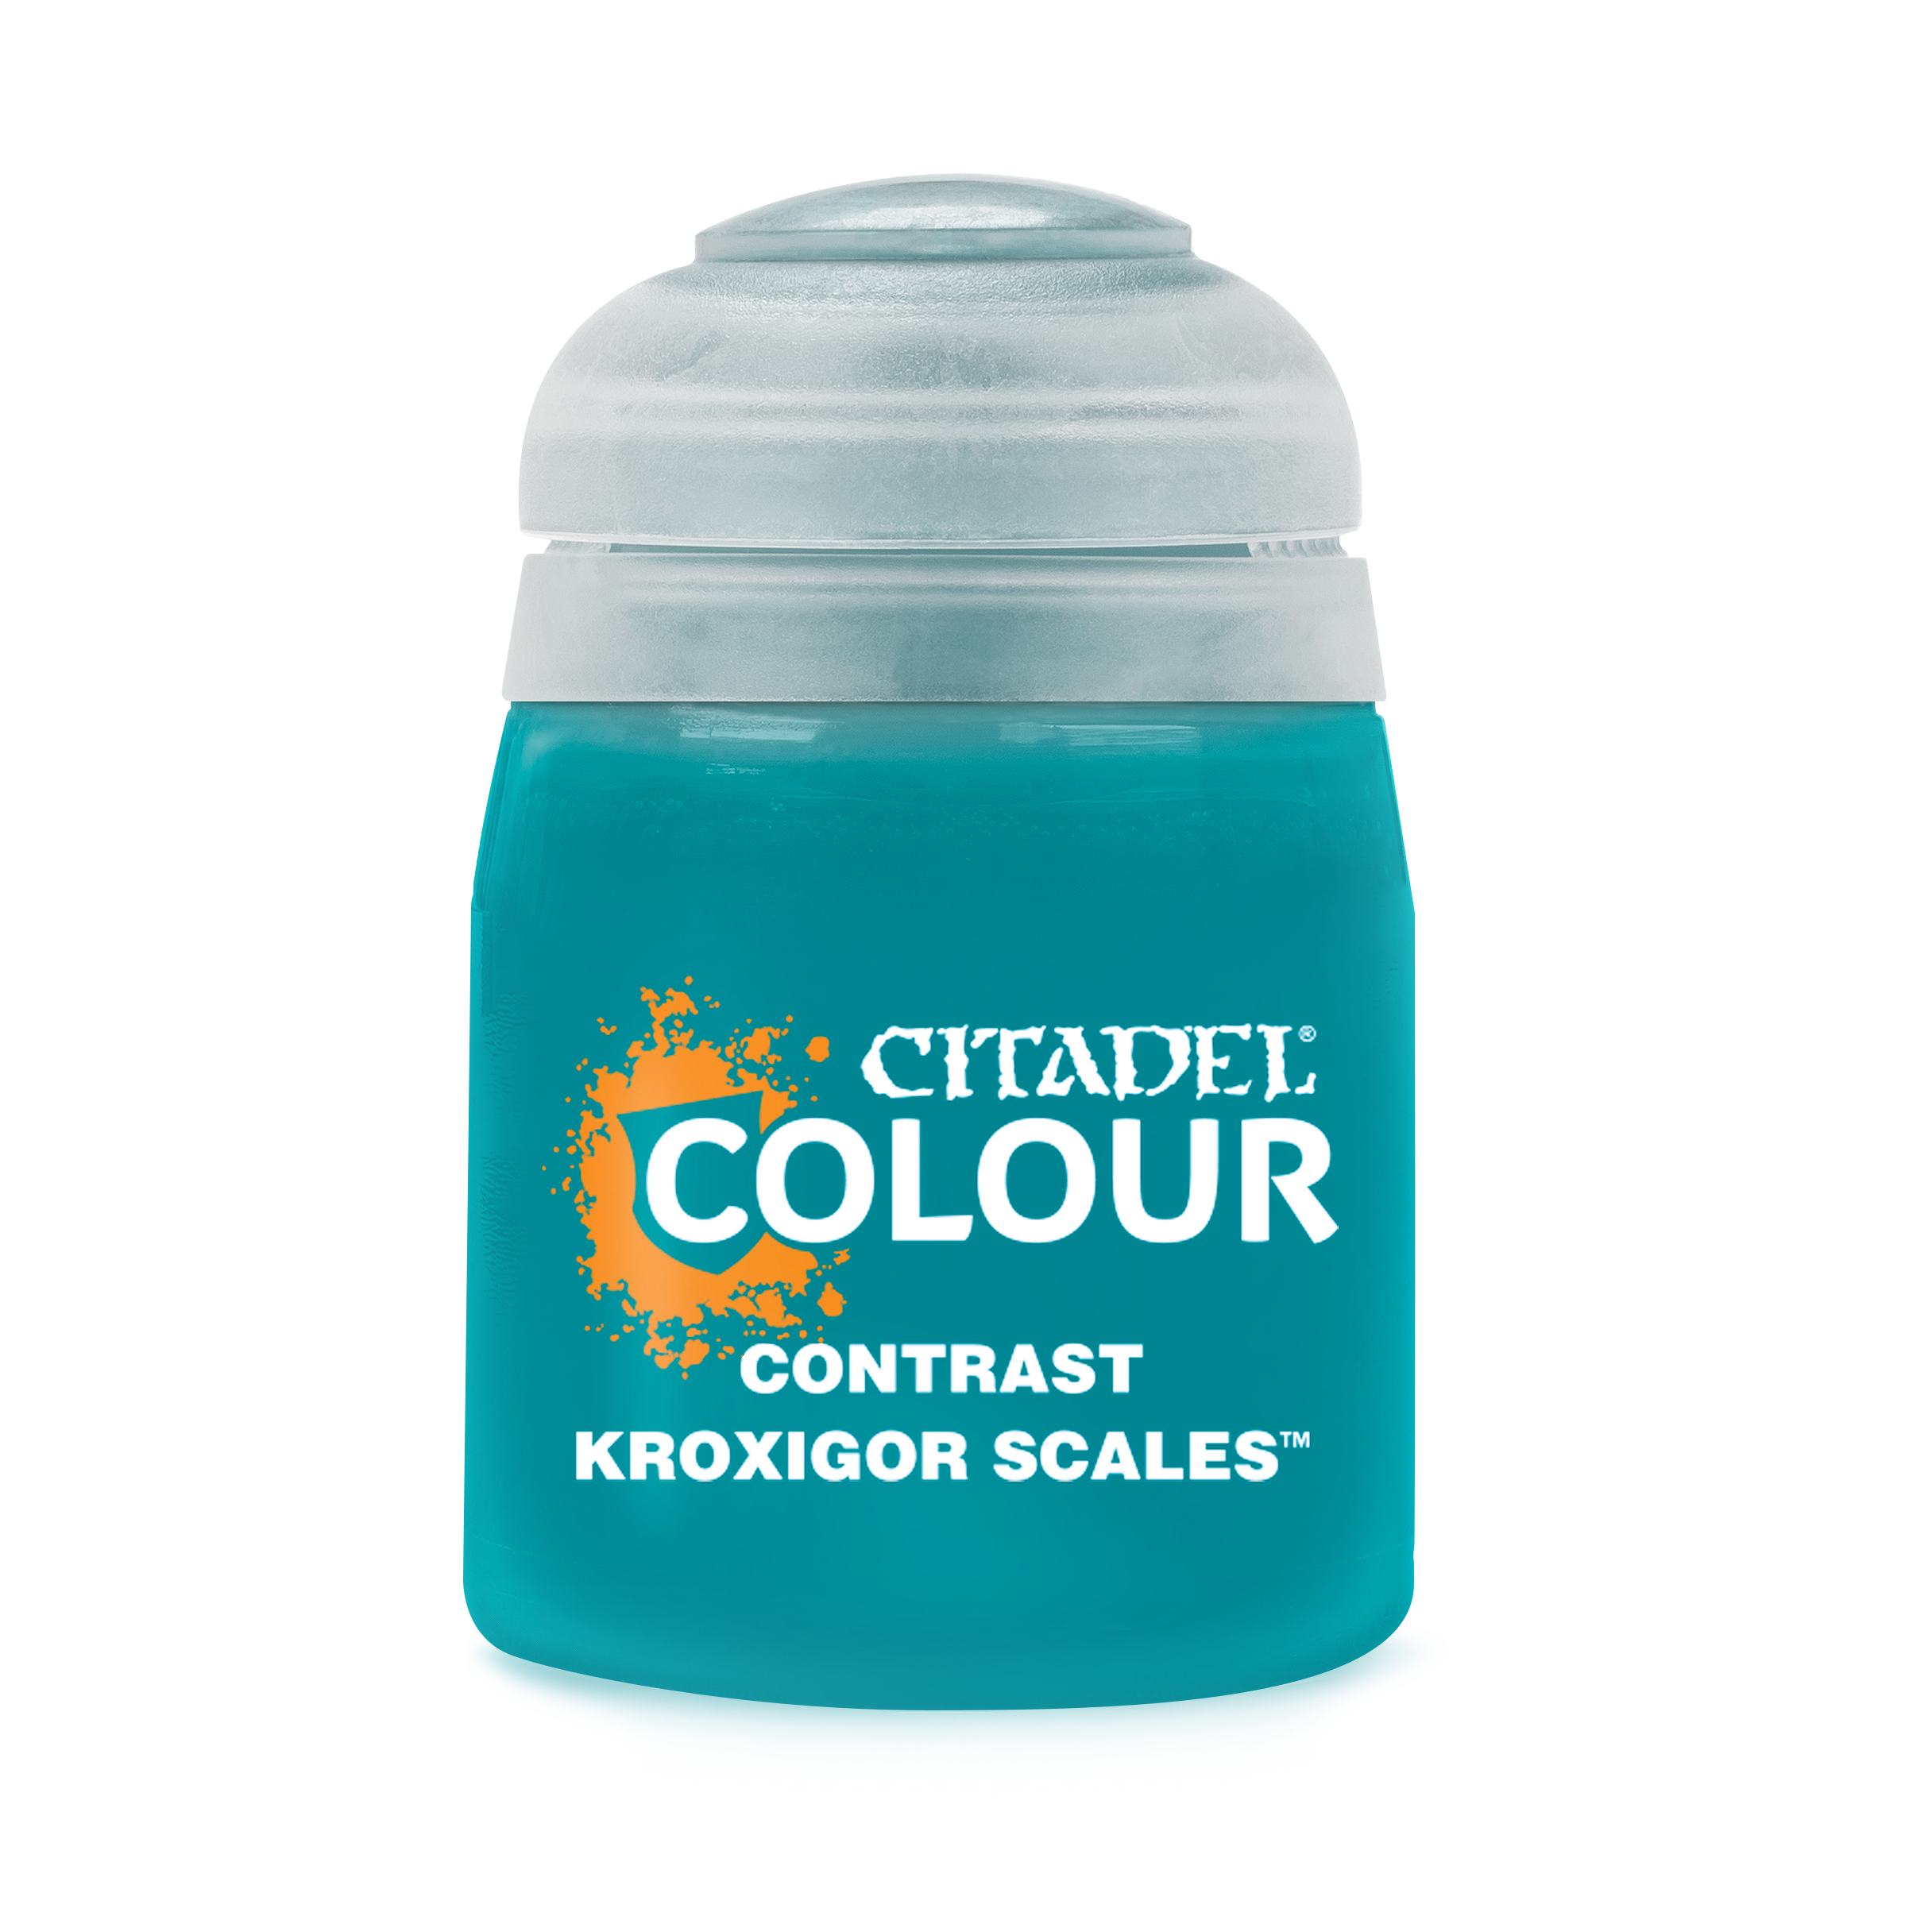 Contrast Kroxigor Scales - Citadel Colour